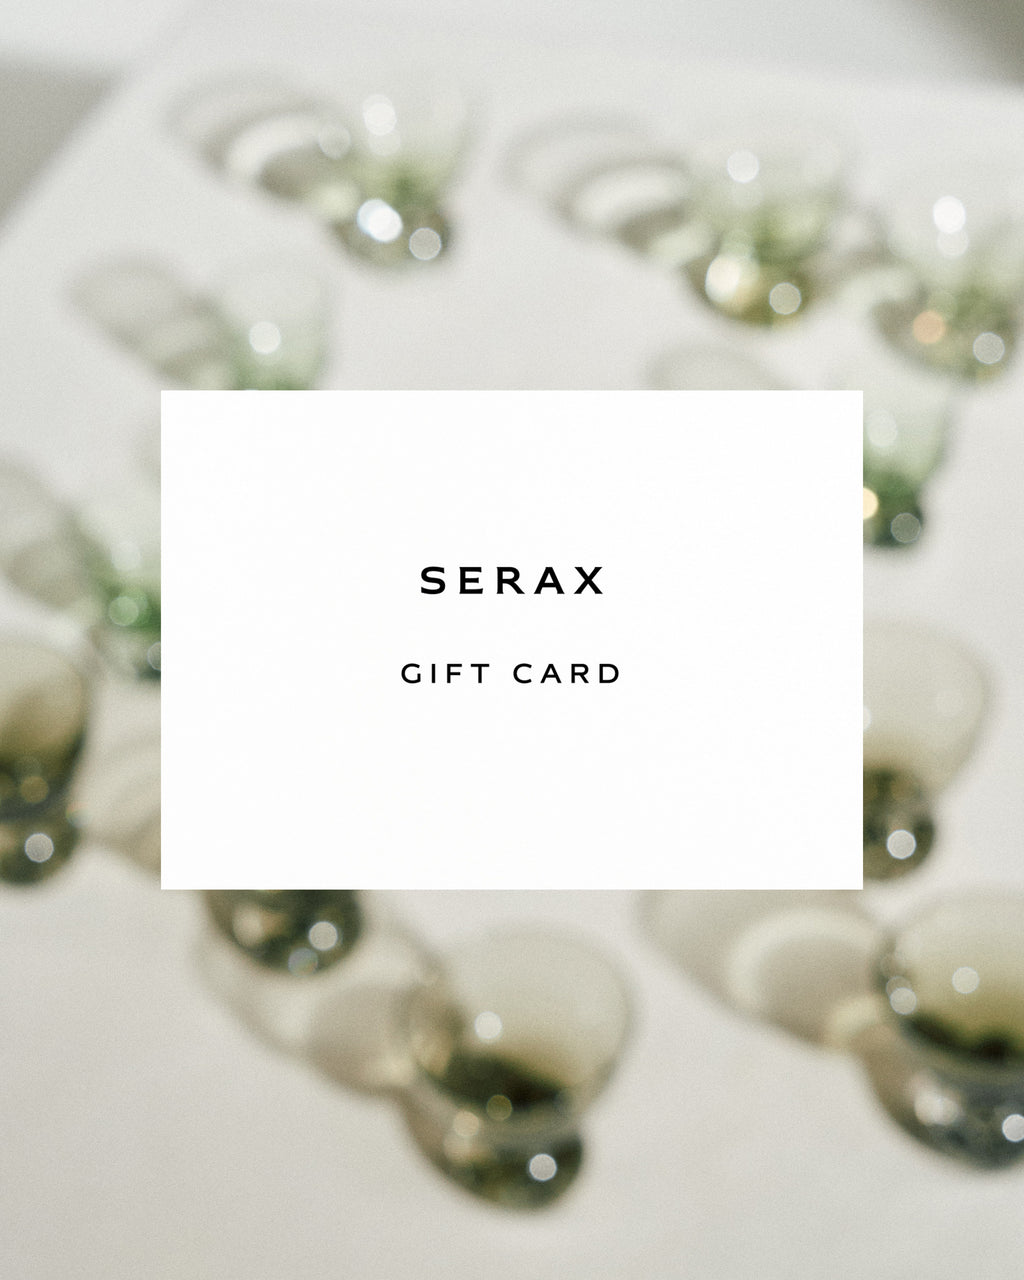 SERAX gift card